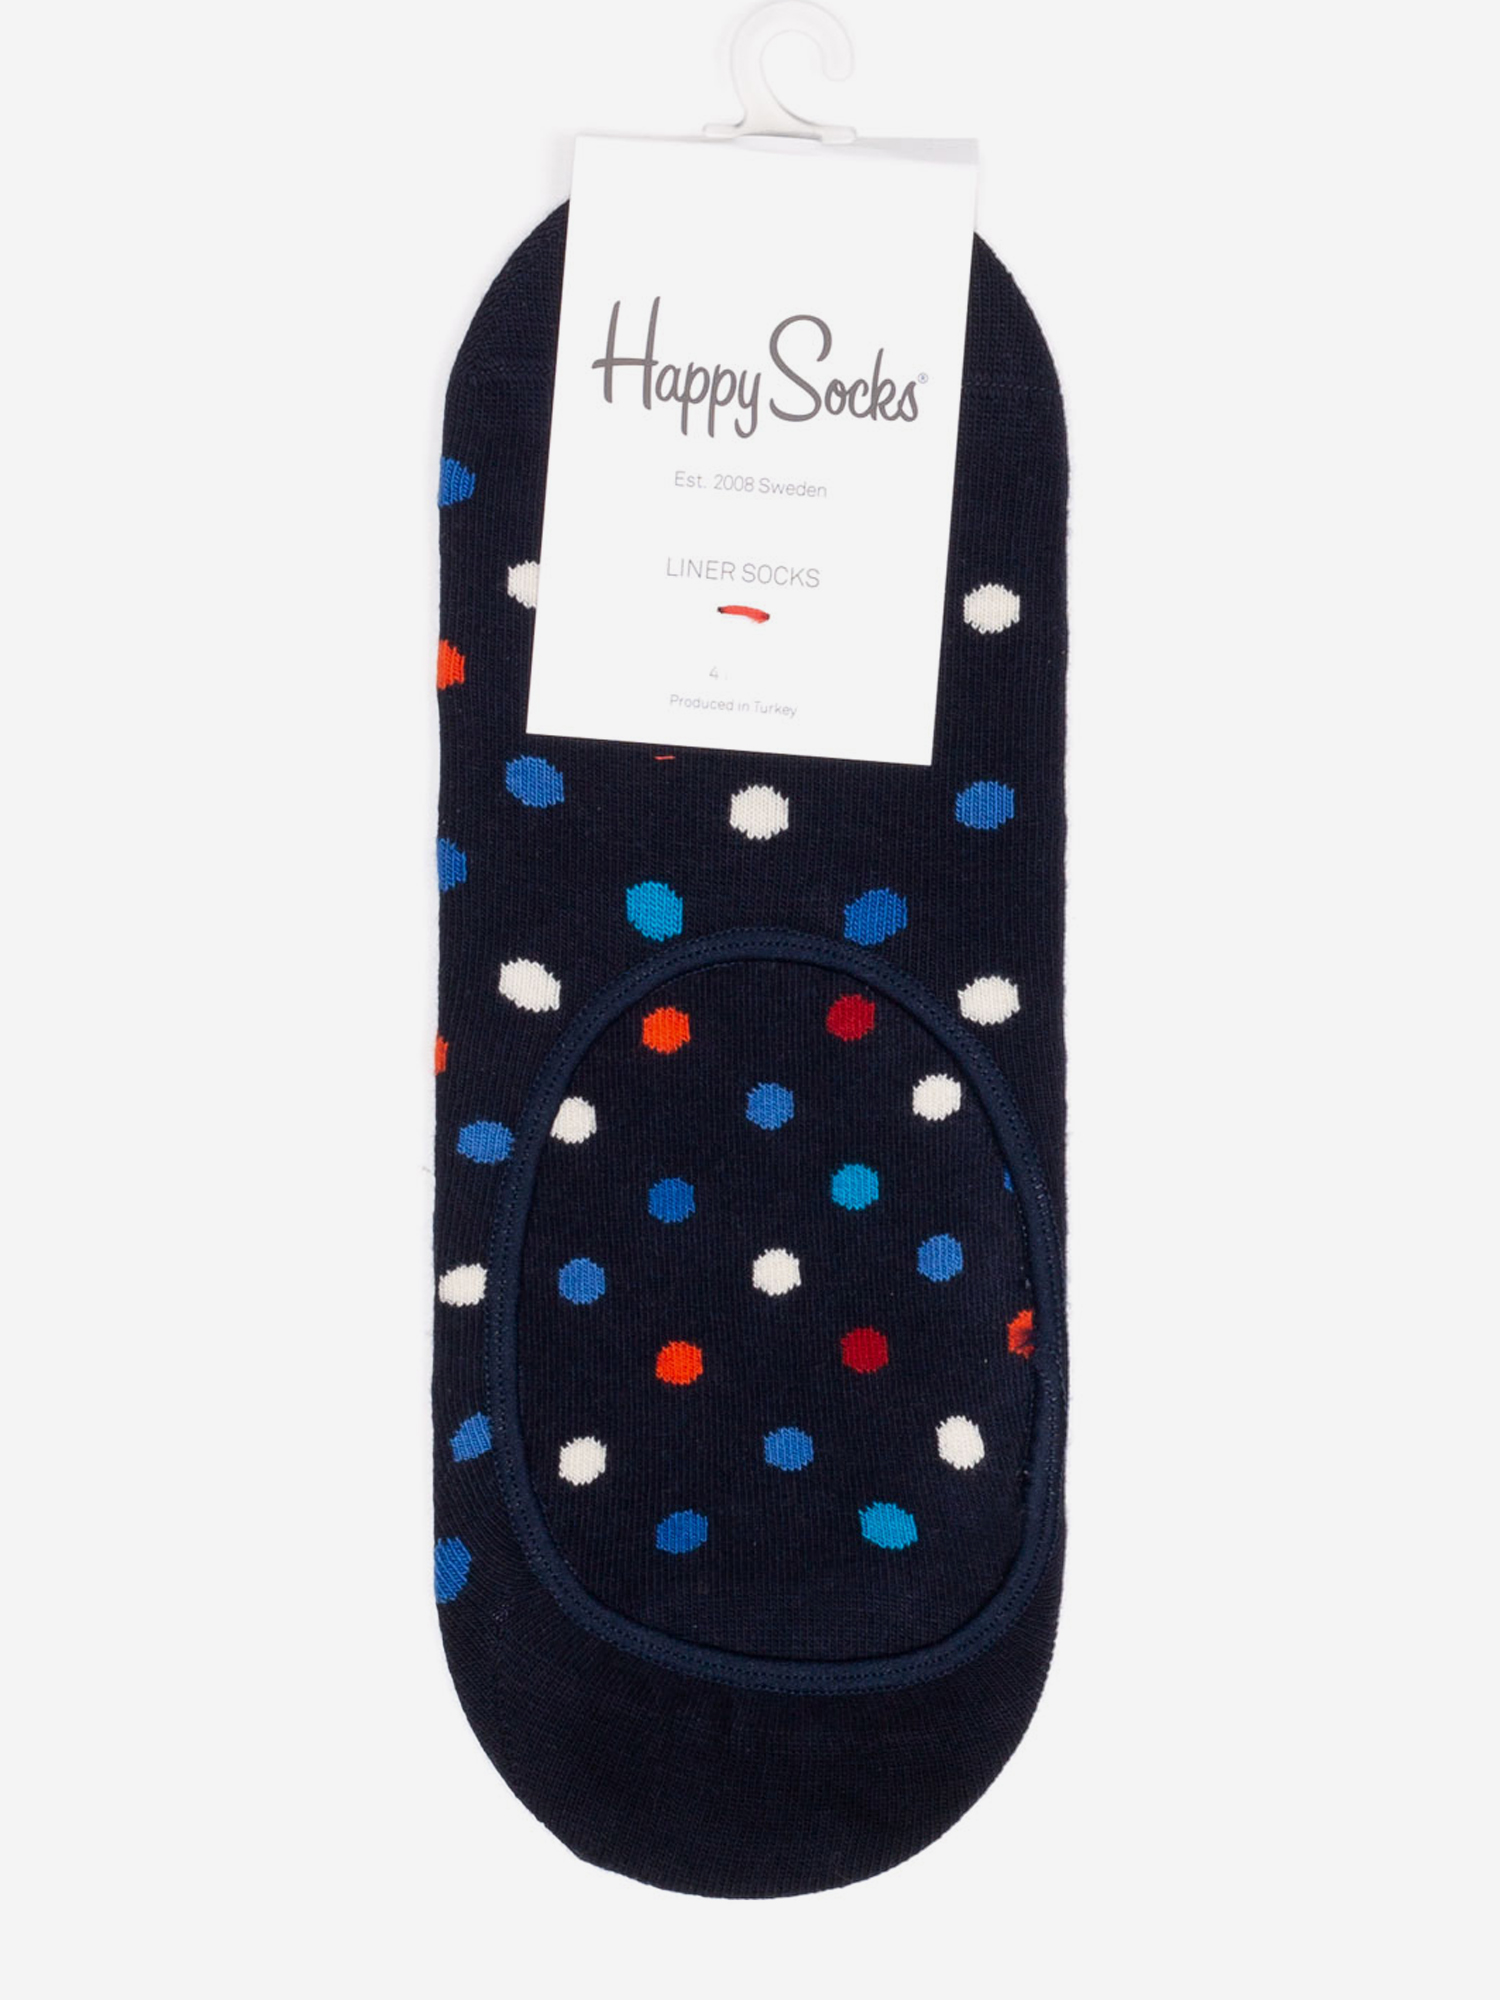 Носки с рисунками Happy Socks - Liner Polka Dot, Черный